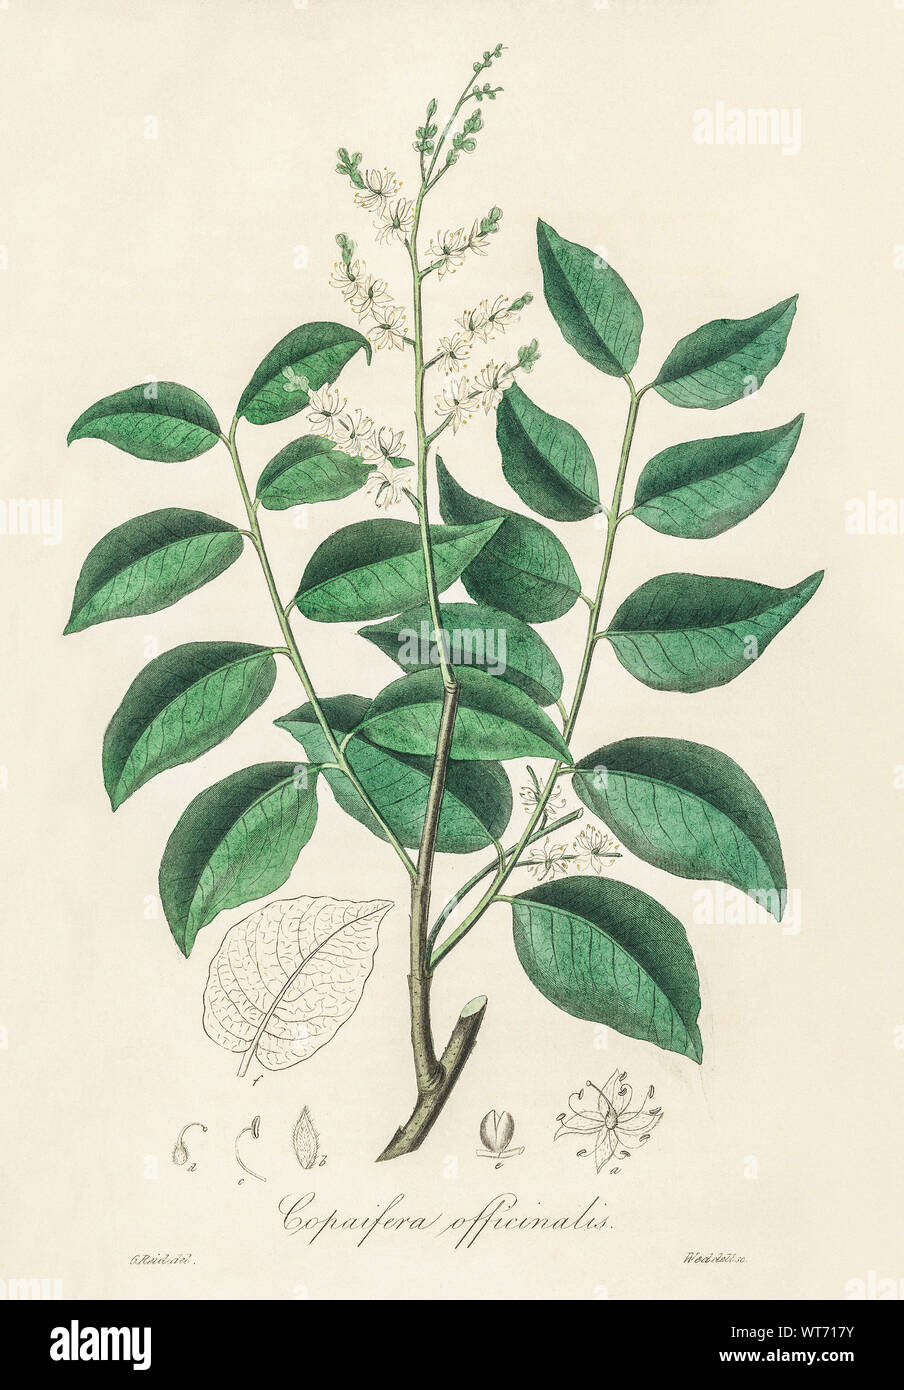 Copaifera Officinalis - Watercolor Print 19th Century Stock Photo